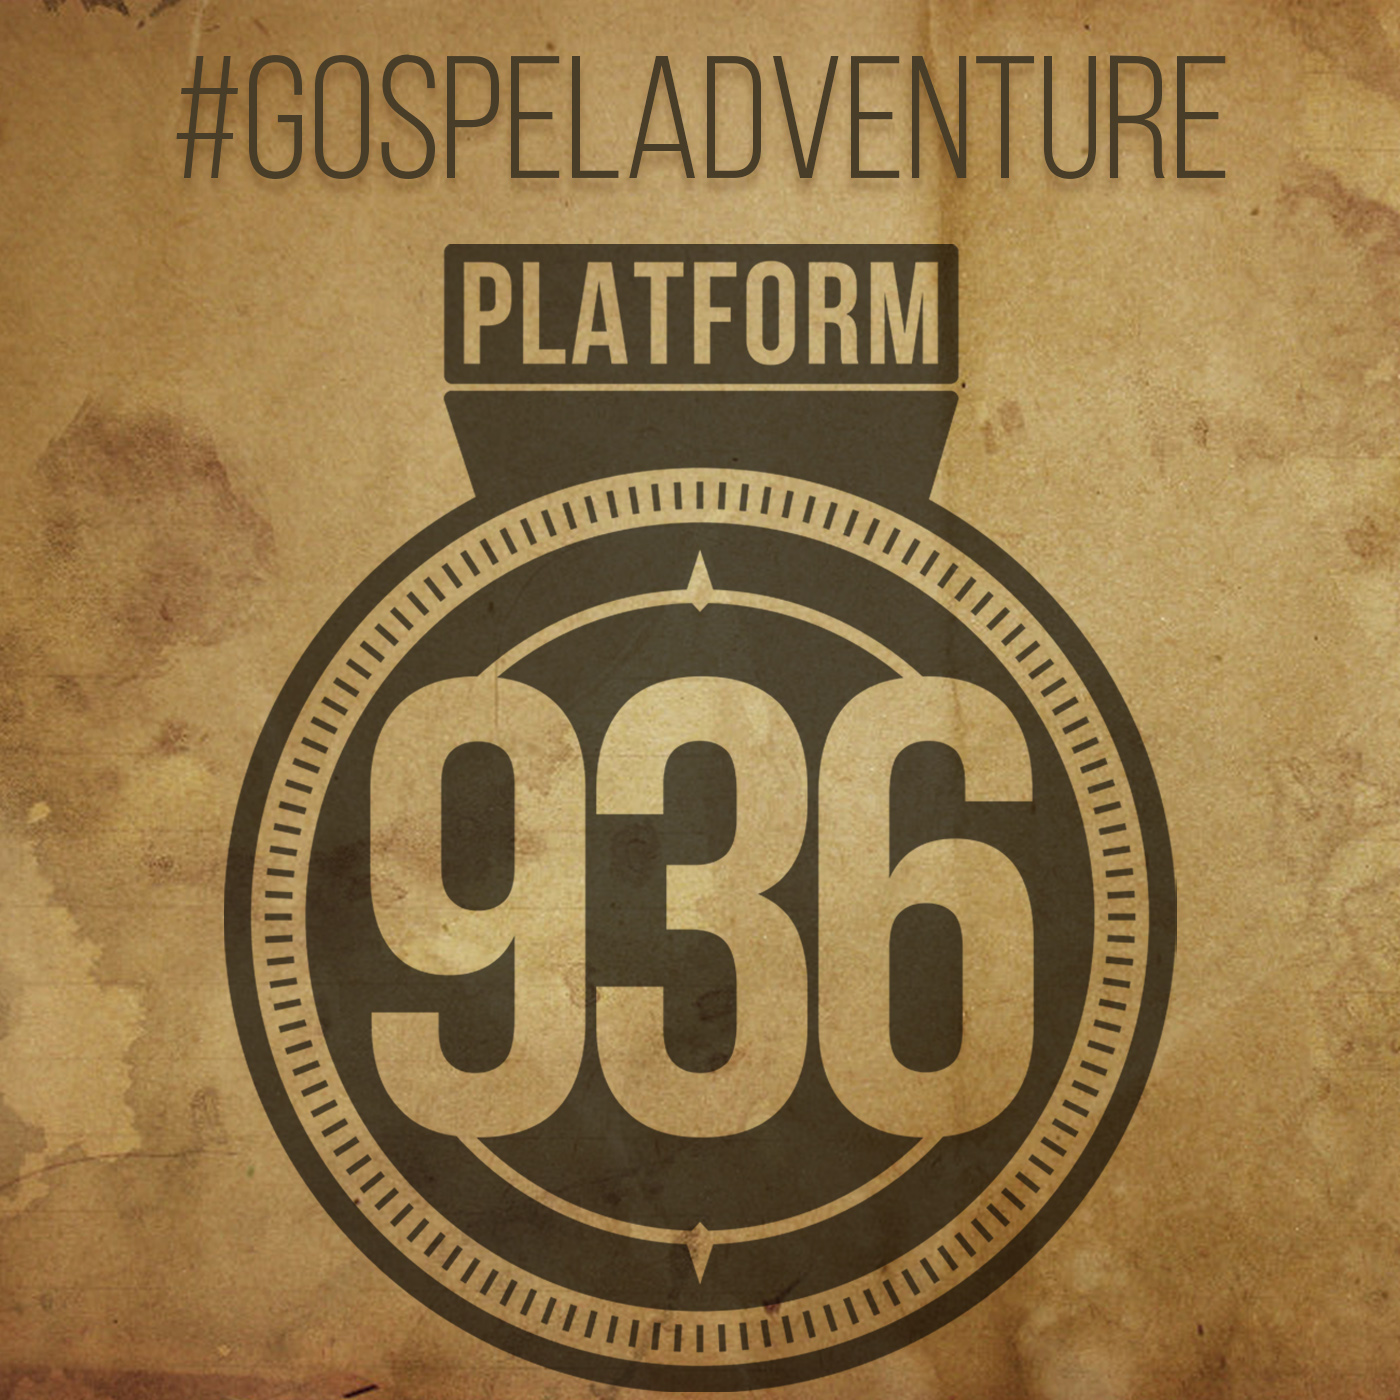 CC Gospel Adventure - Platform 936 - Chad Balthrop - 1-5-2020